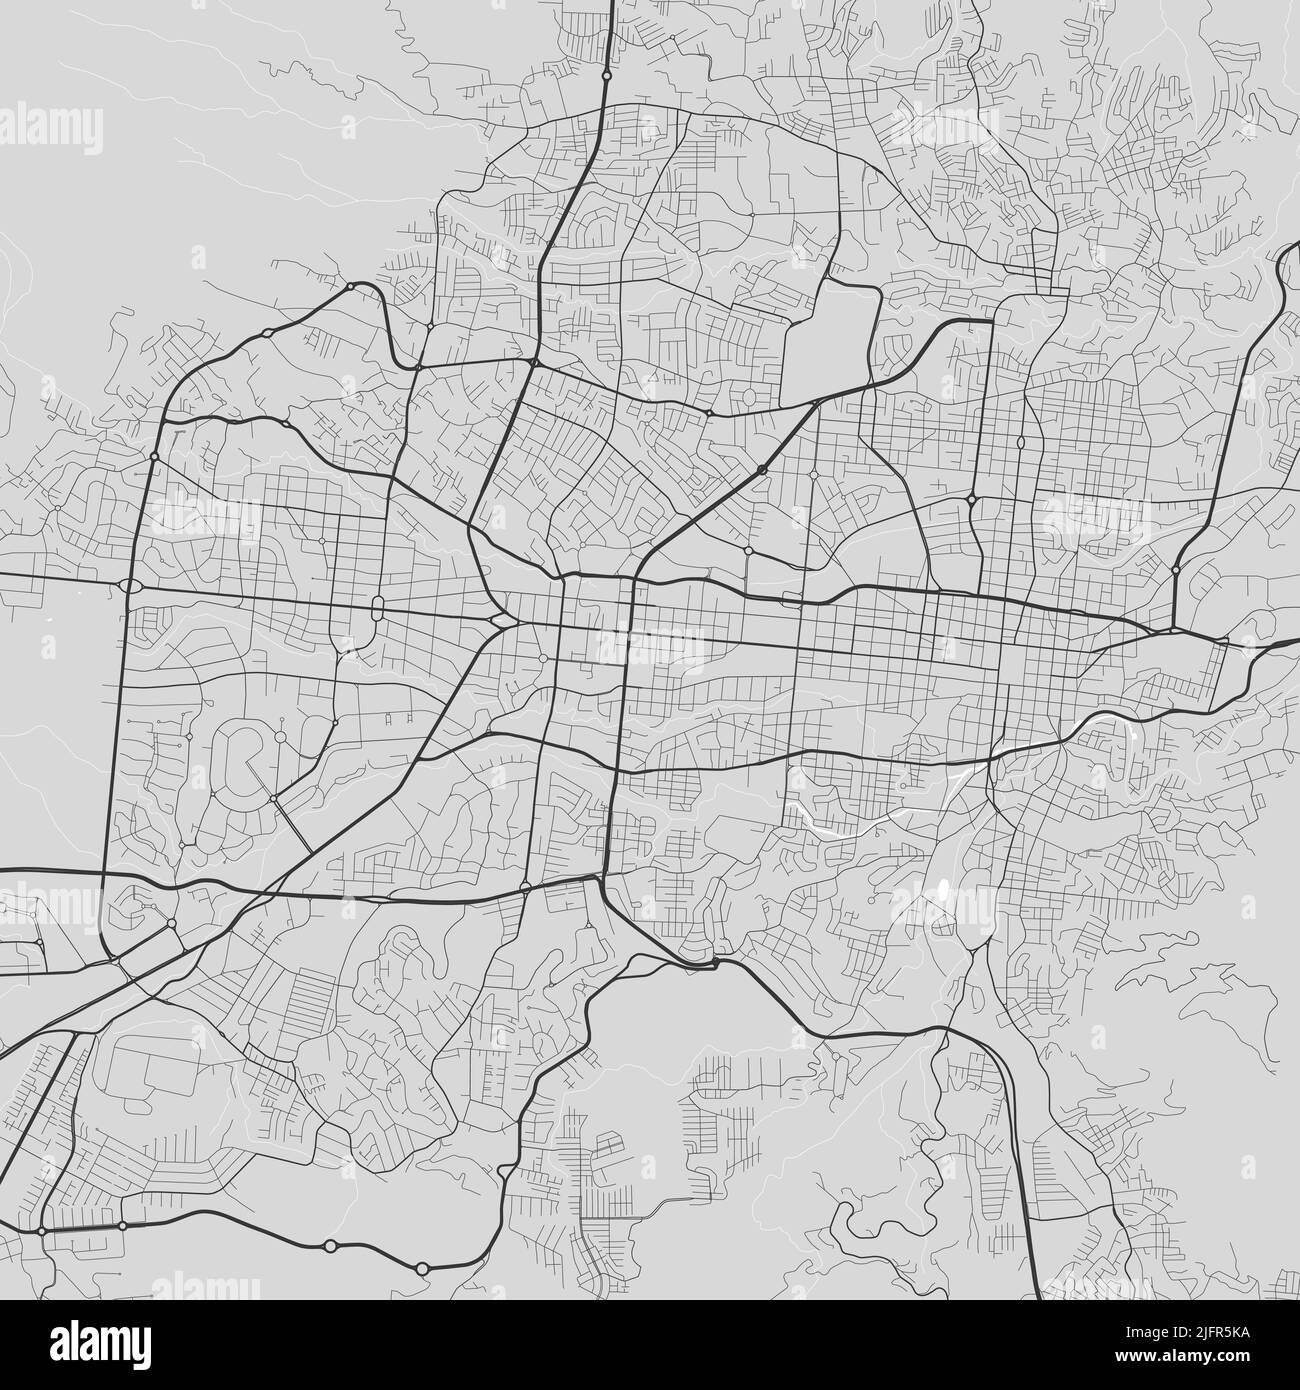 Vector map of San Salvador city. Urban grayscale poster. Road map image with metropolitan city area view. Stock Vector